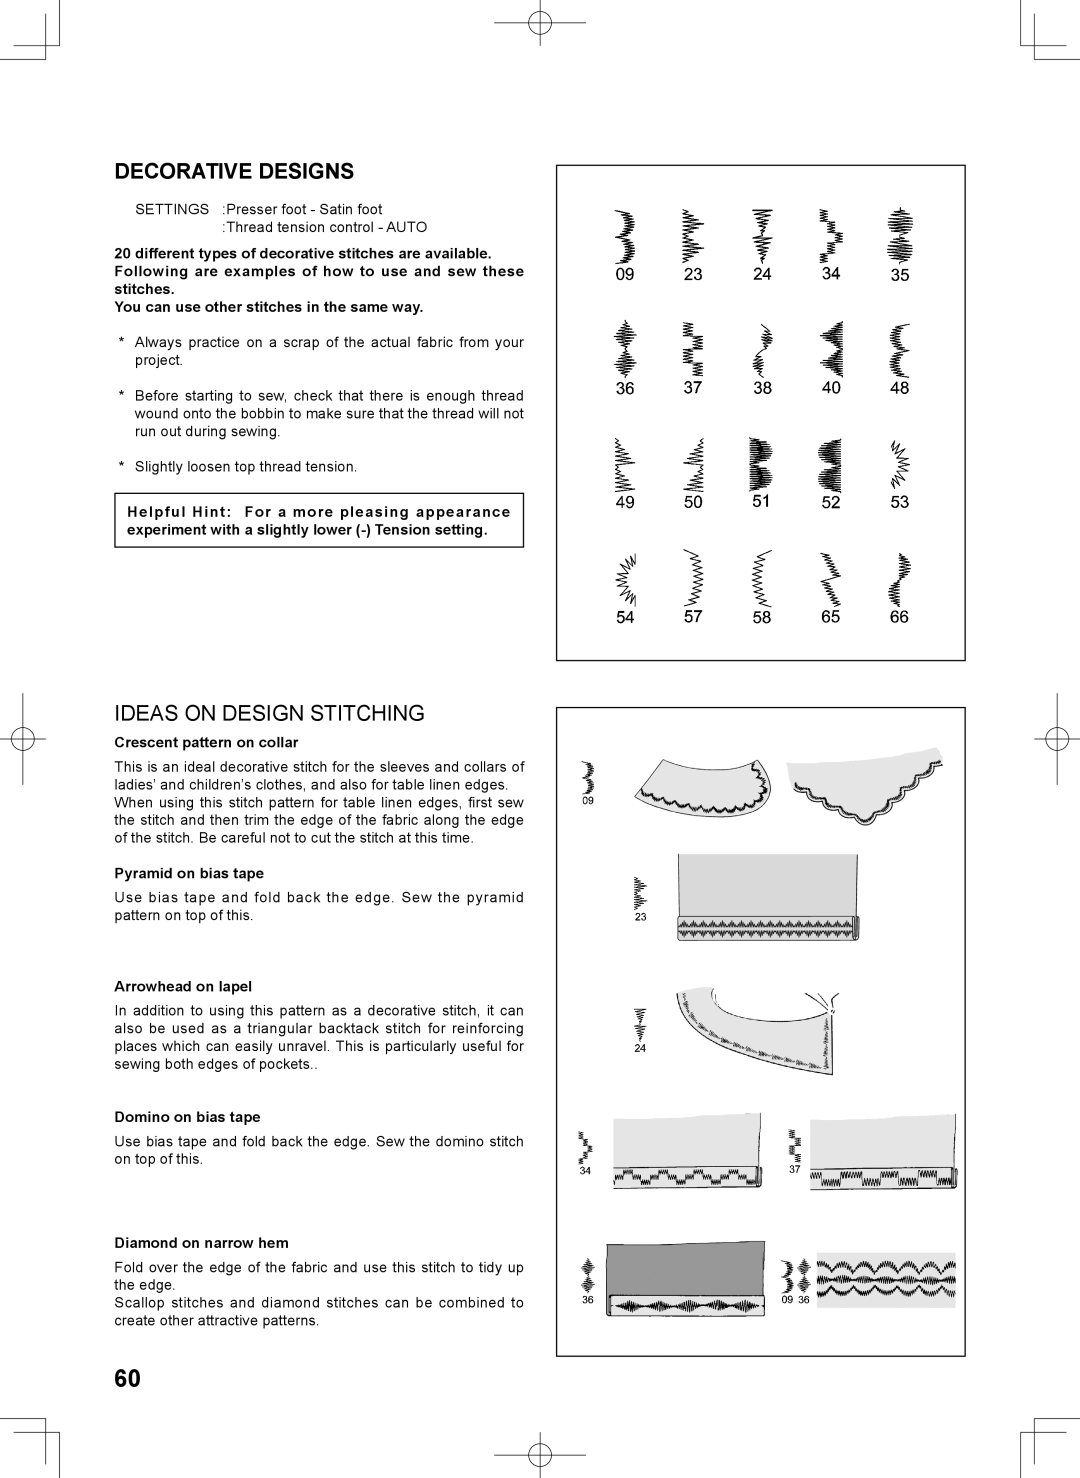 Singer 7467S instruction manual Decorative Designs, Ideas On Design Stitching 